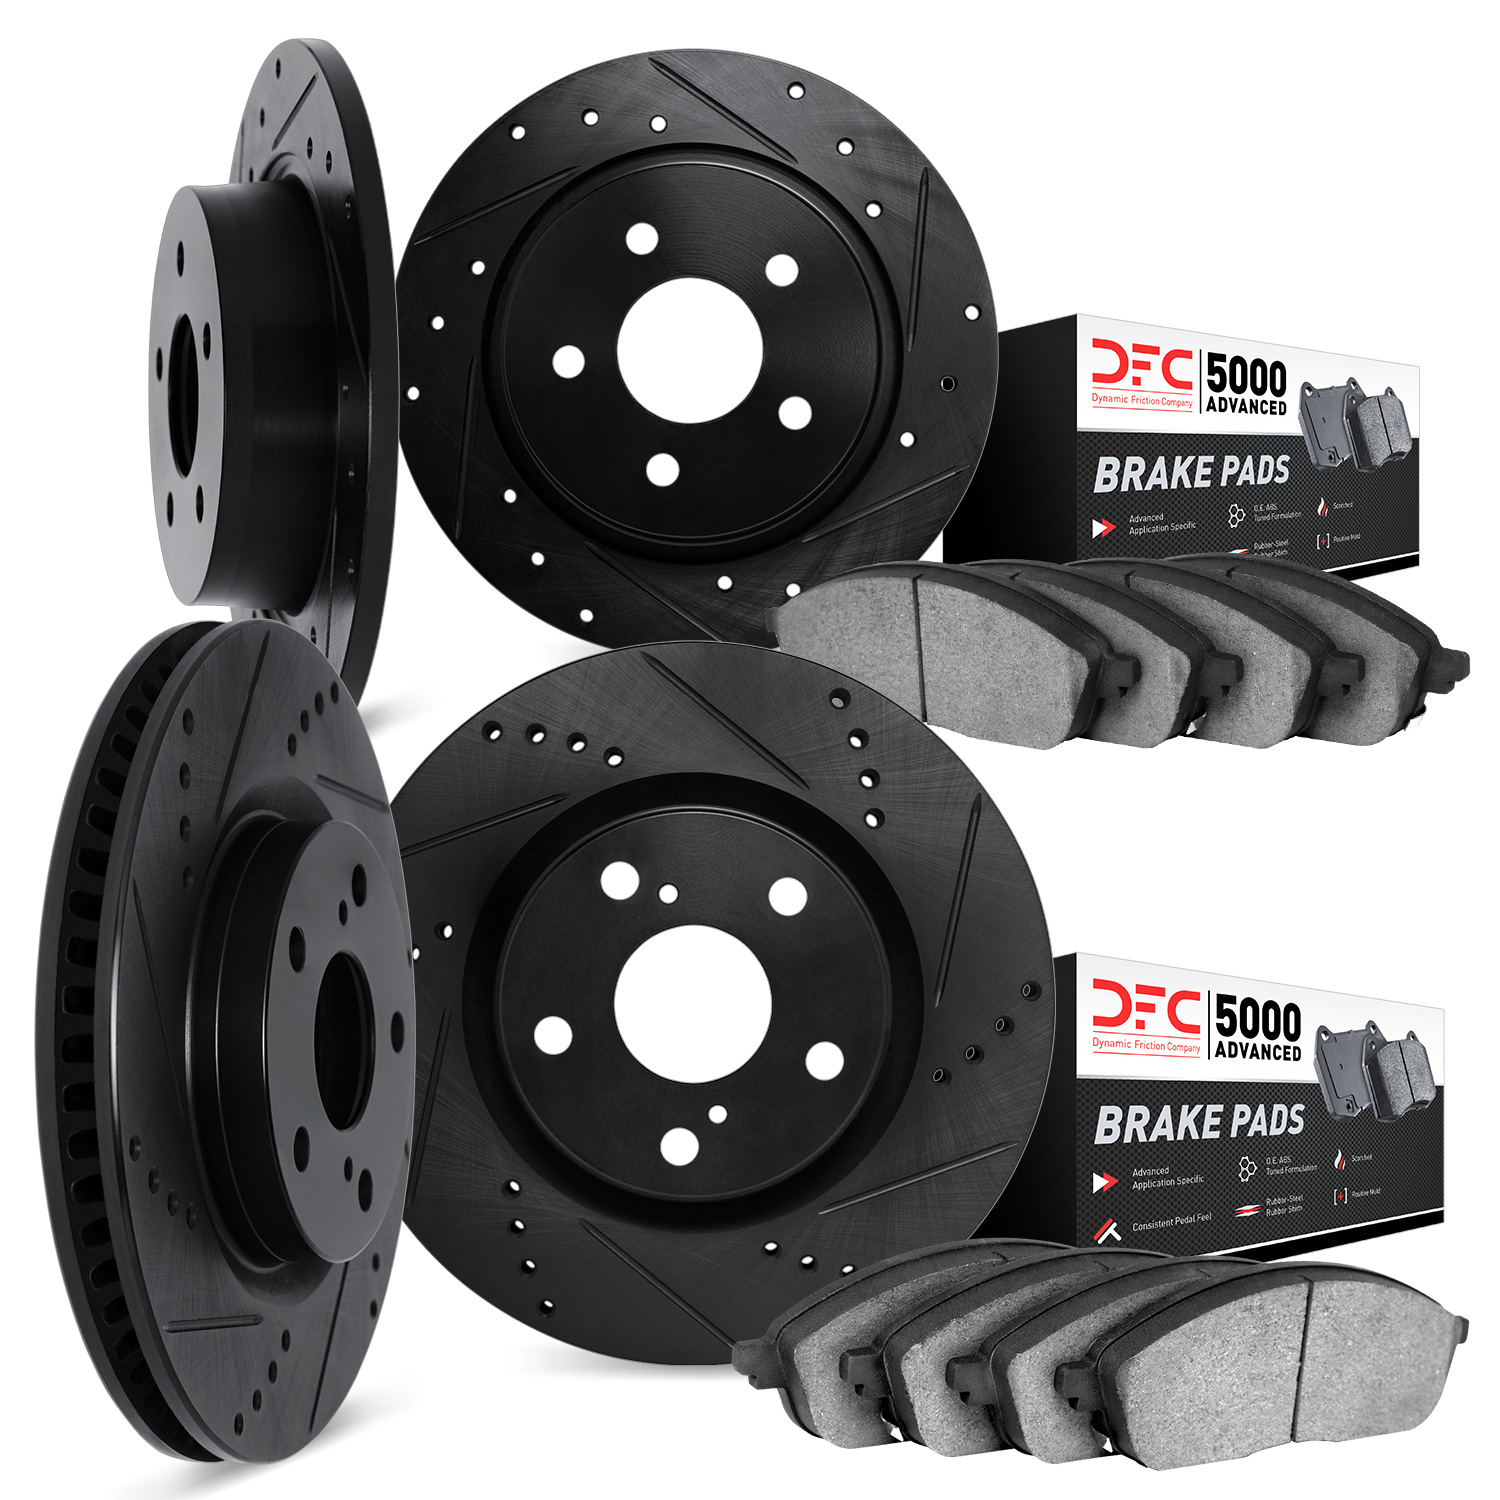 8504-39028 Drilled/Slotted Brake Rotors w/5000 Advanced Brake Pads Kit [Black], 2016-2017 Mopar, Position: Front and Rear